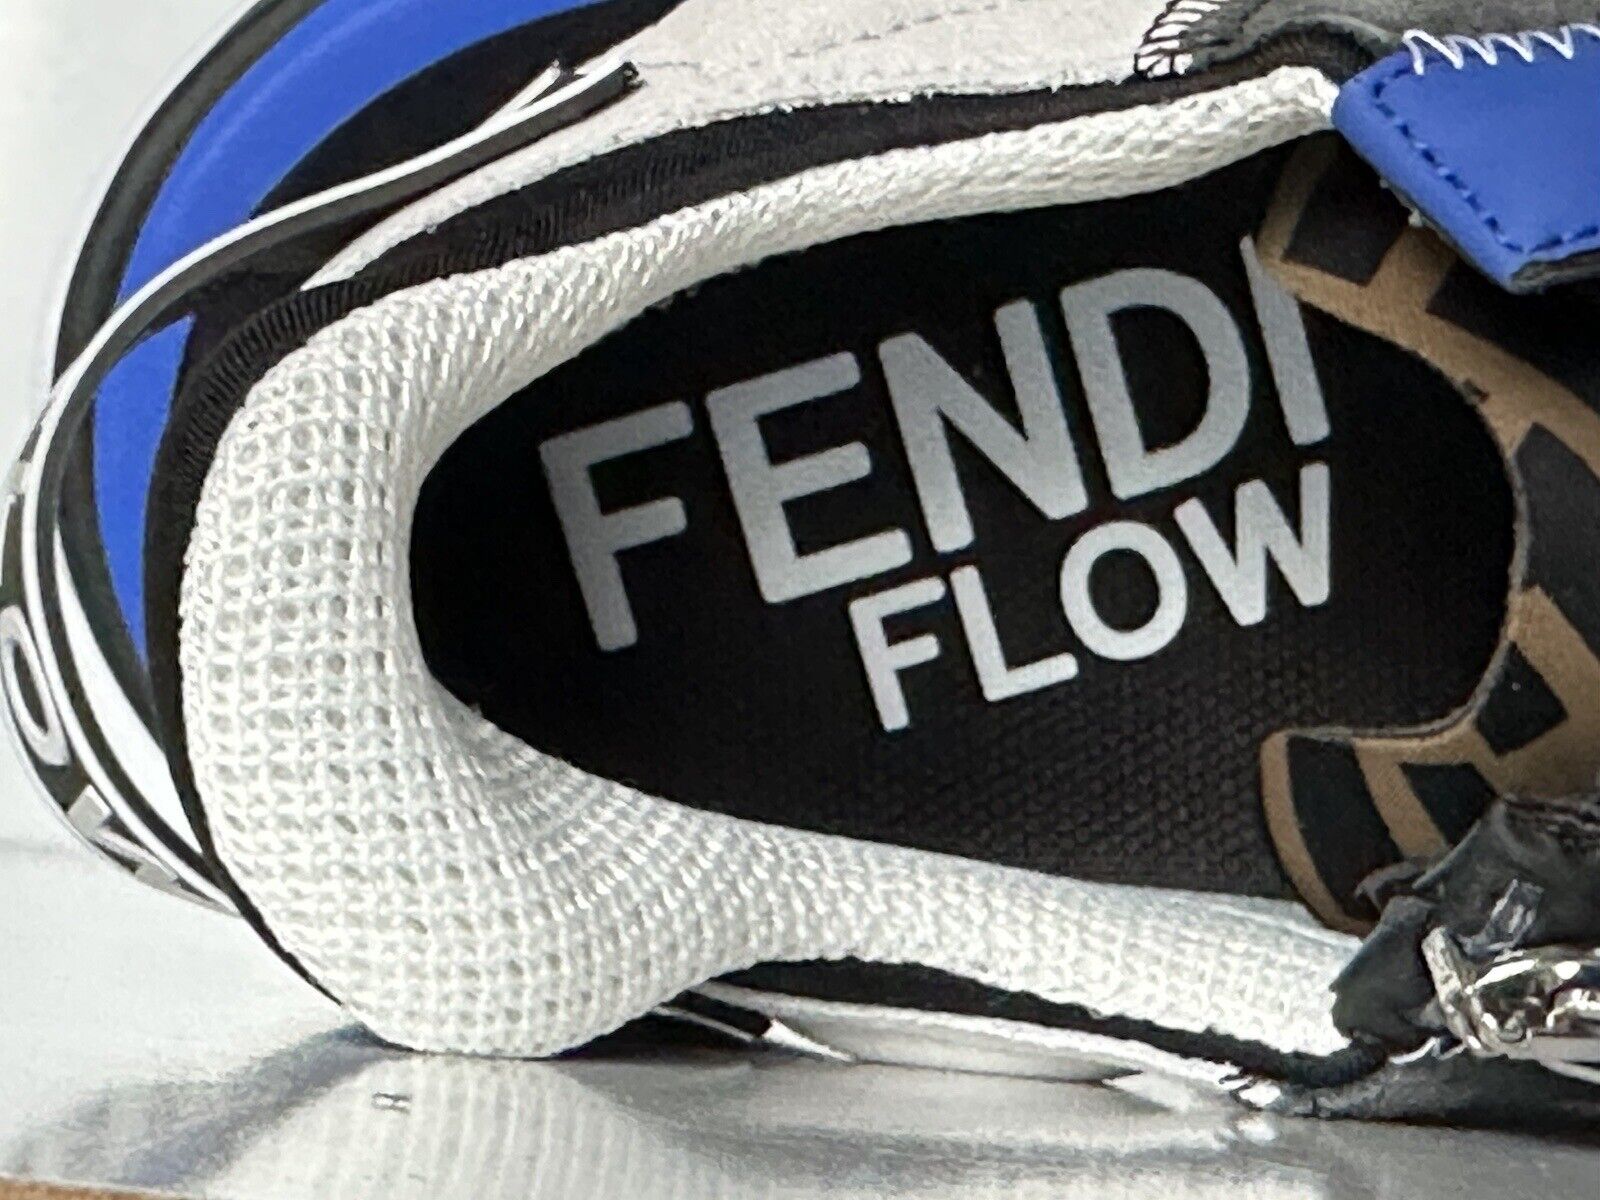 NIB $930 Fendi Flow Men's Leather/Fabric Sneakers Black/Blue 11 US (44) 7E1392